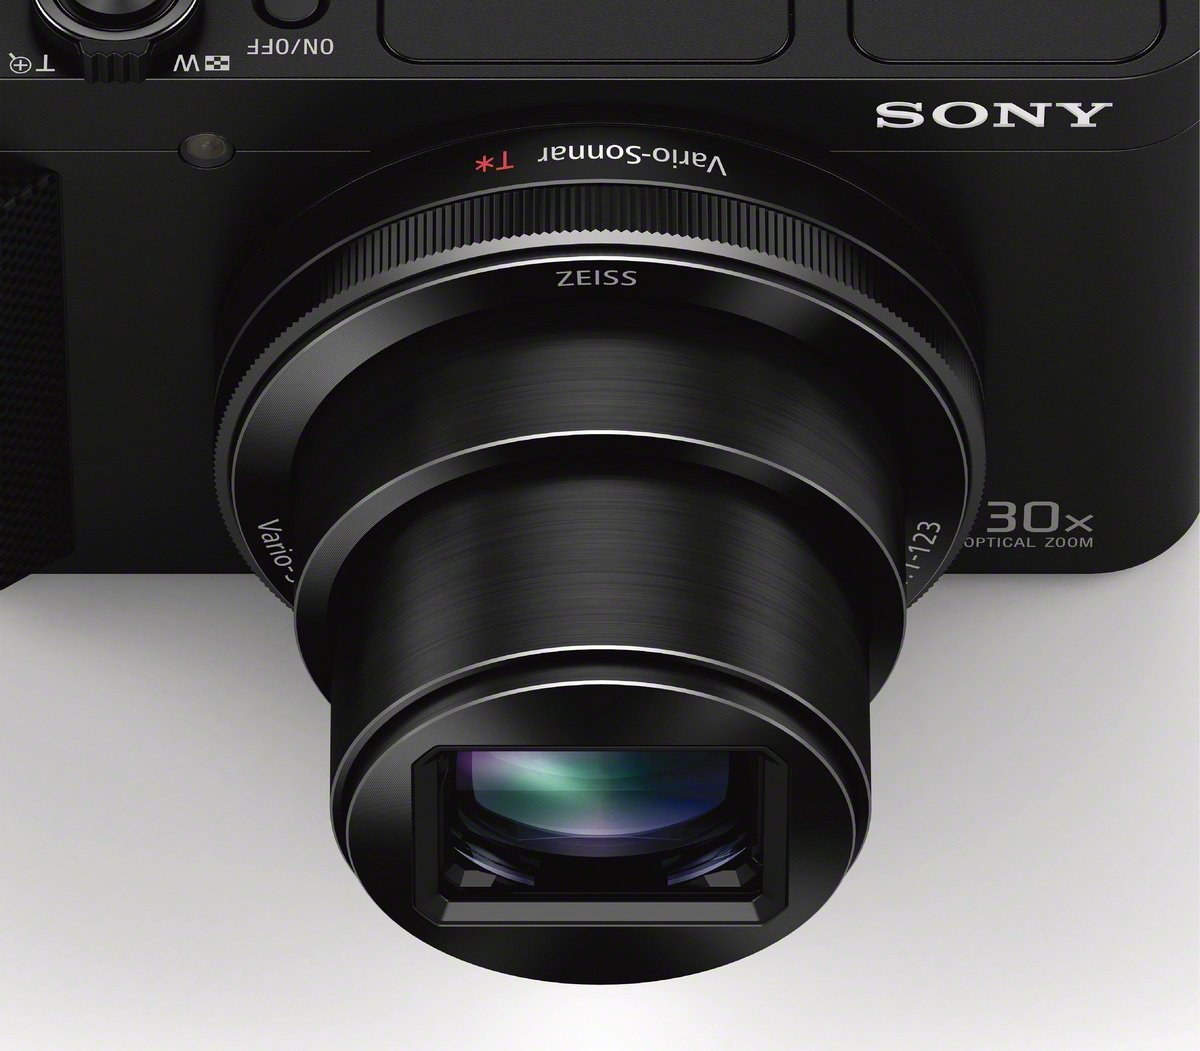 Sony Cyber-shot DSC-HX90V Review | Santha Cruz